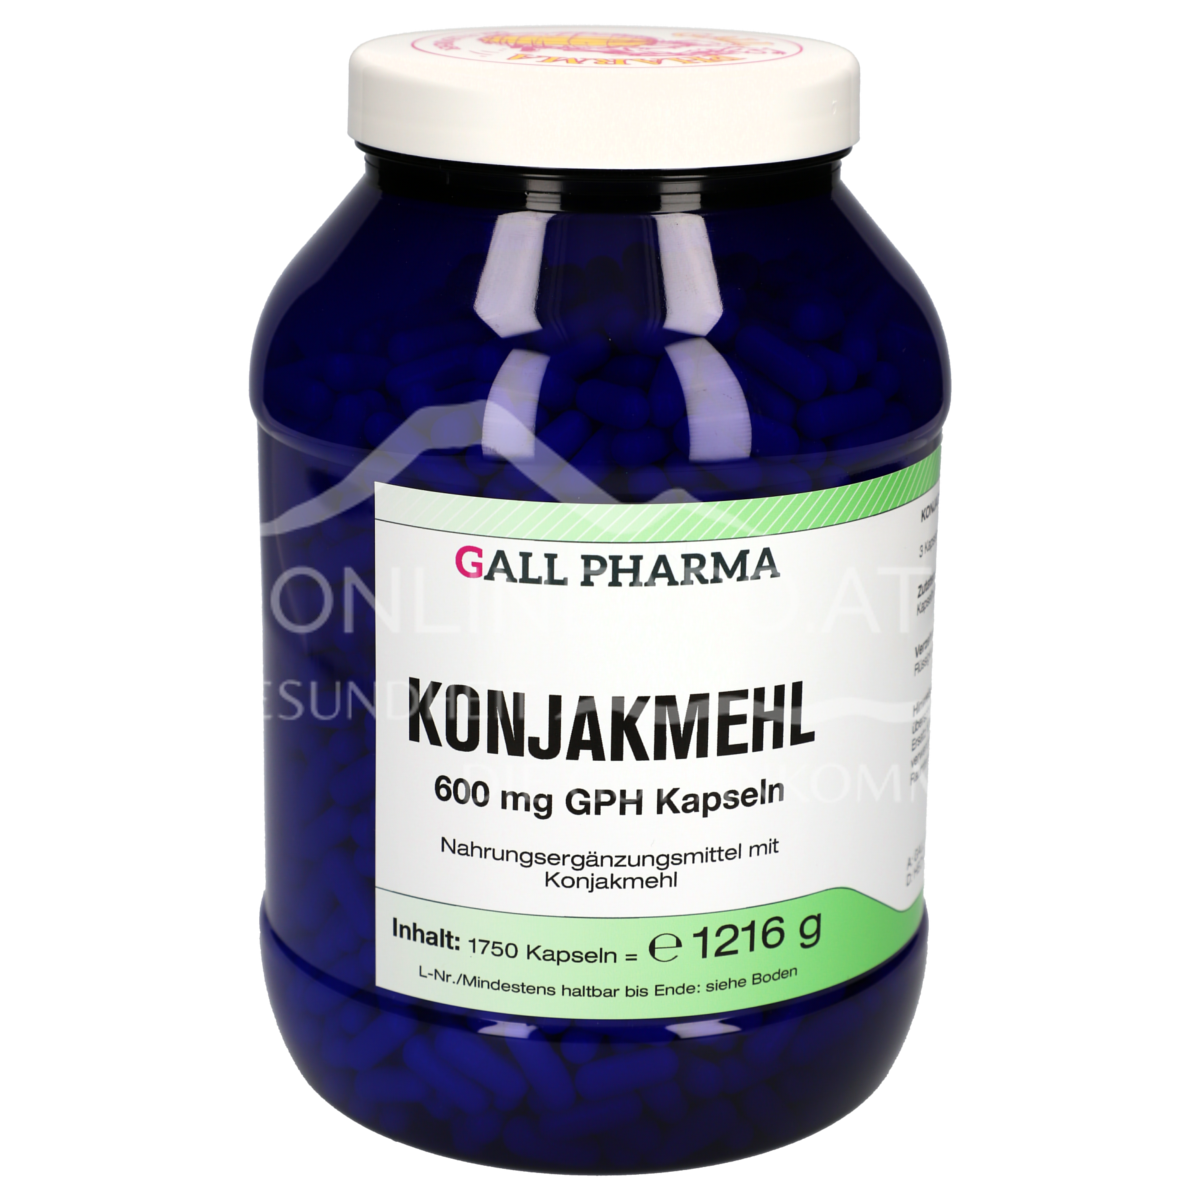 Gall Pharma Konjakmehl 600 mg Kapseln